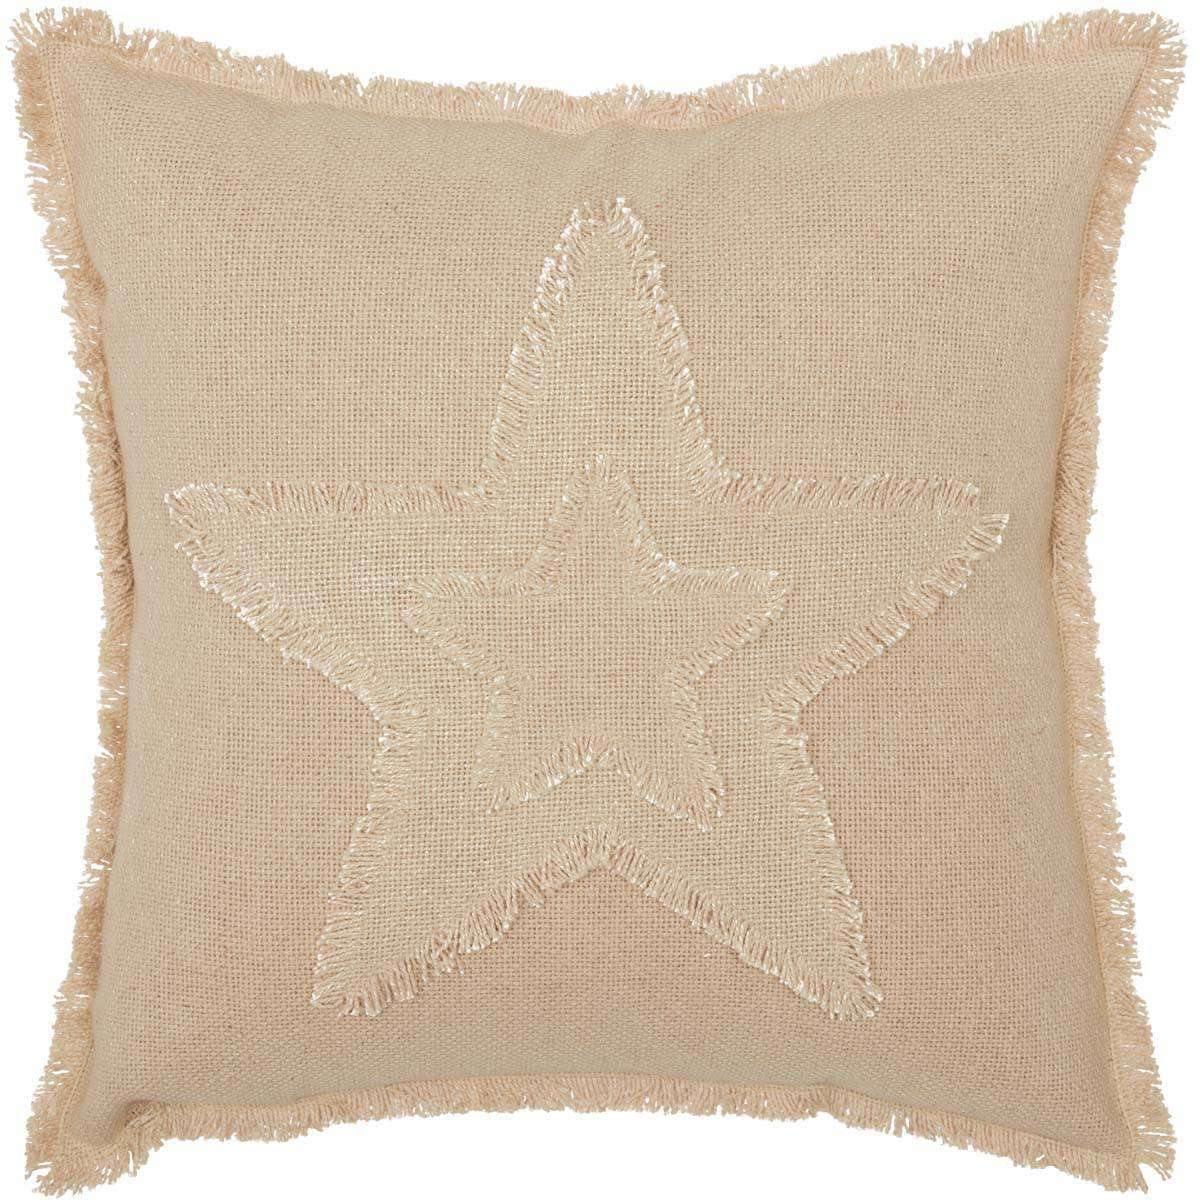 Burlap Vintage Star Pillow 18x18 - The Fox Decor